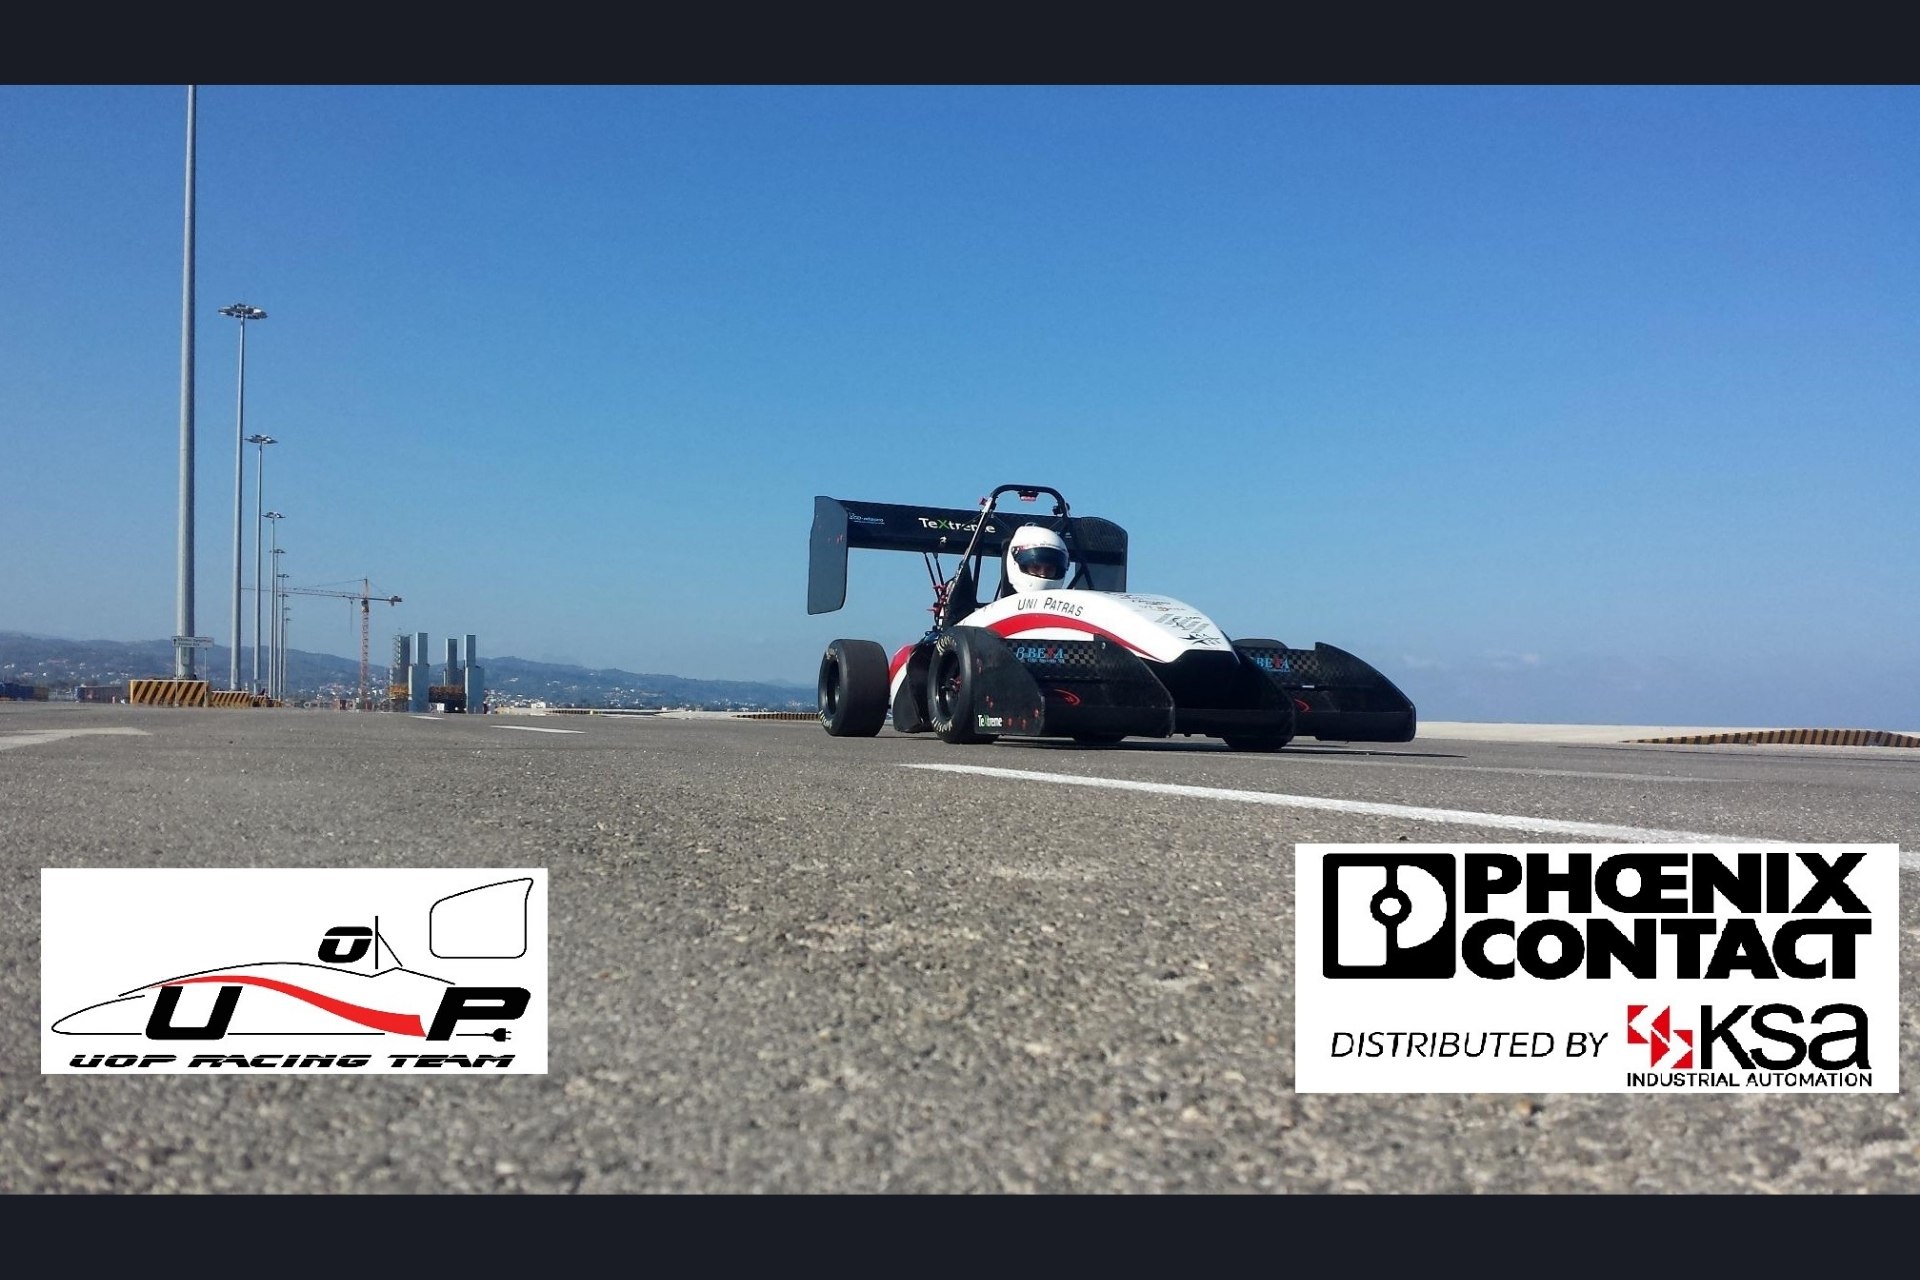 H Phoenix Contact & η KSA υποστηρίζουν την προσπάθεια της ομάδας Formula Student UoP Racing